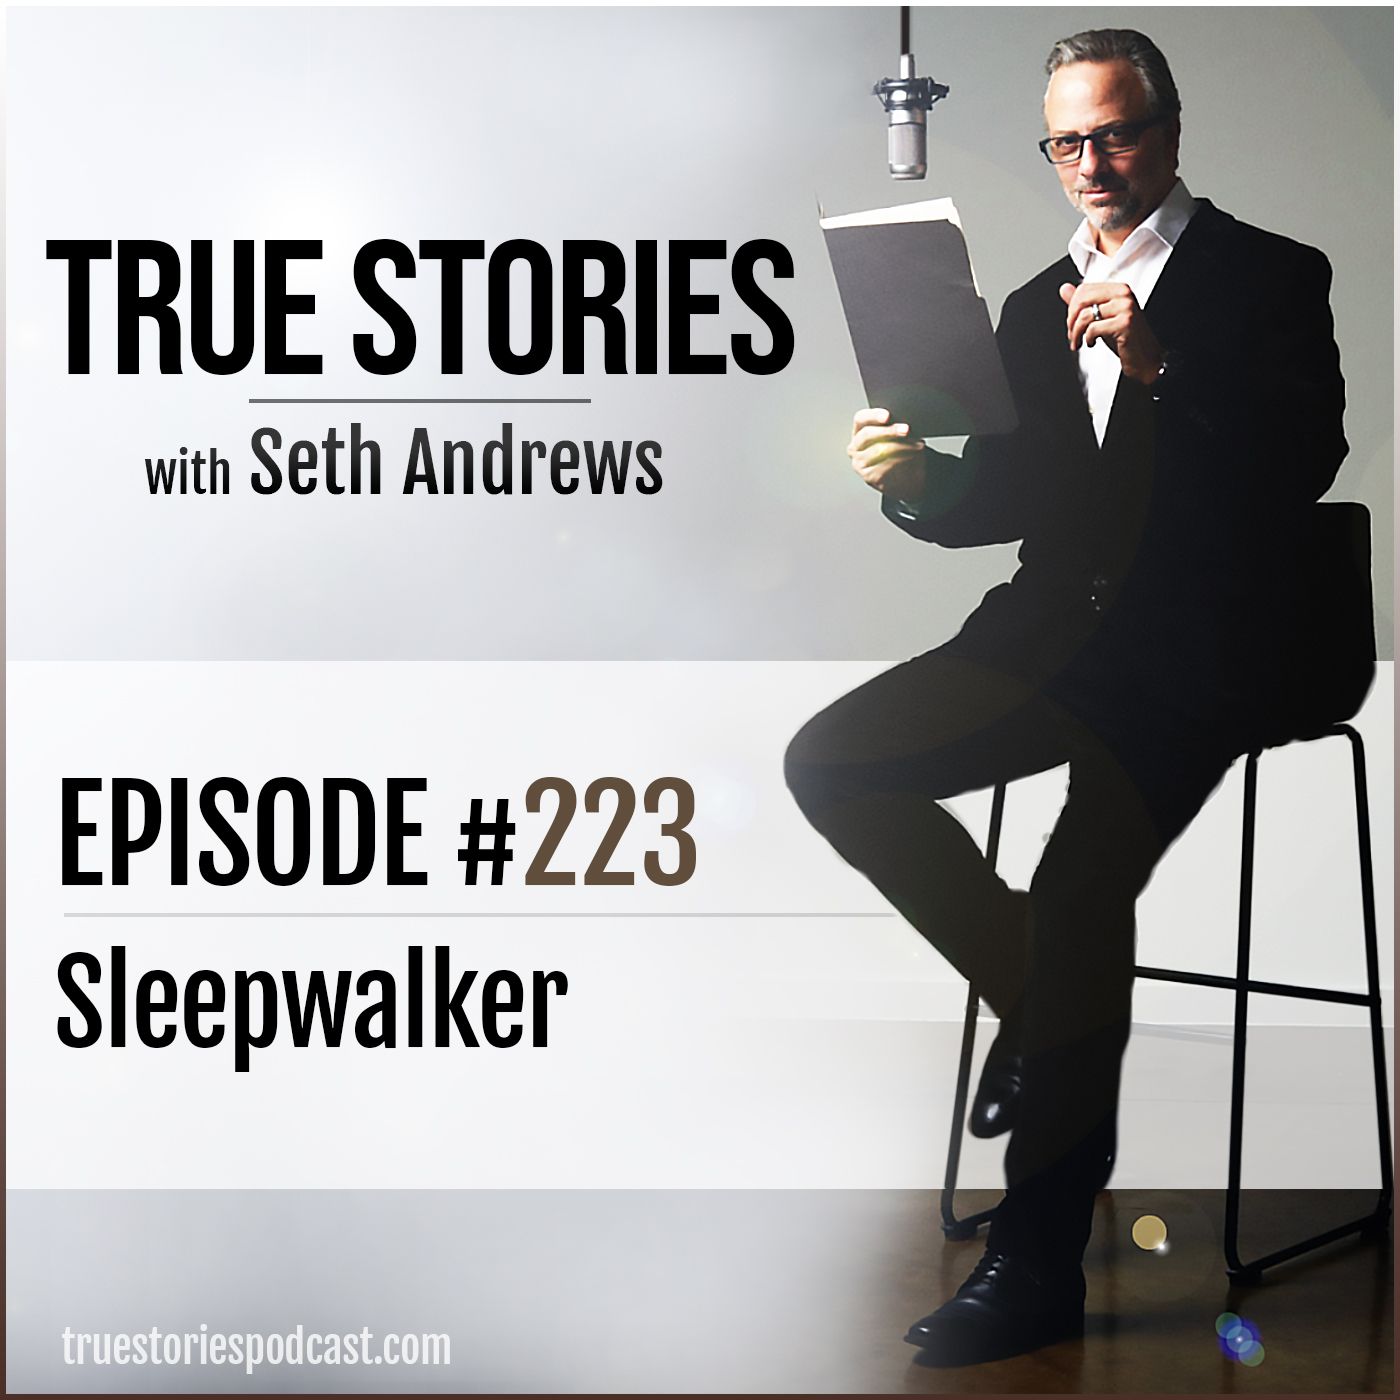 True Stories #223 - Sleepwalker